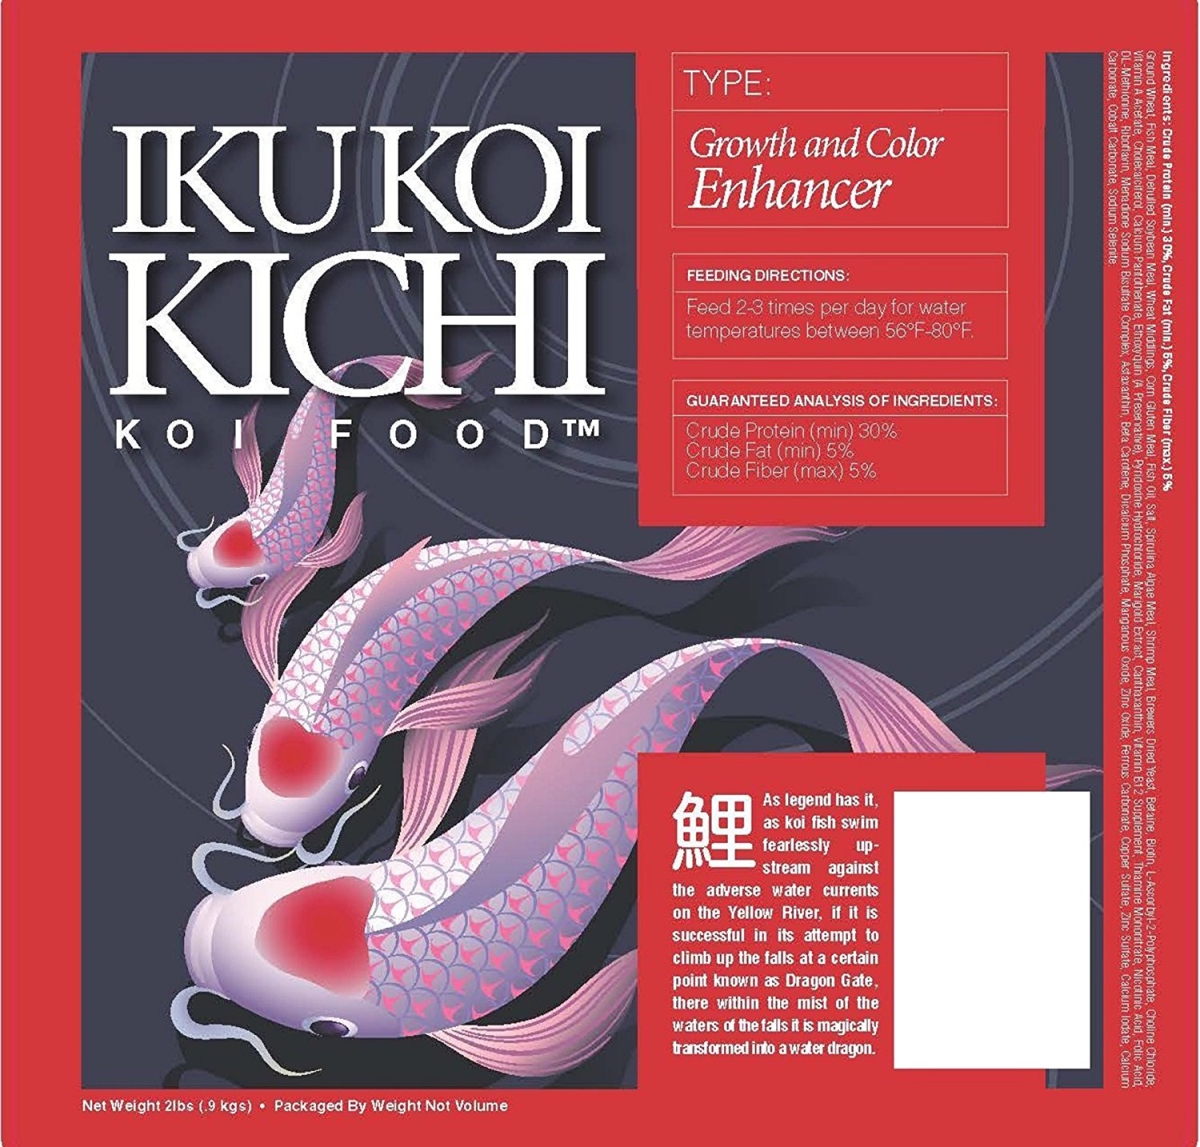 Picture of Iku Koi Kichi KKFA20 20 lbs Color Enhancer Fish Food